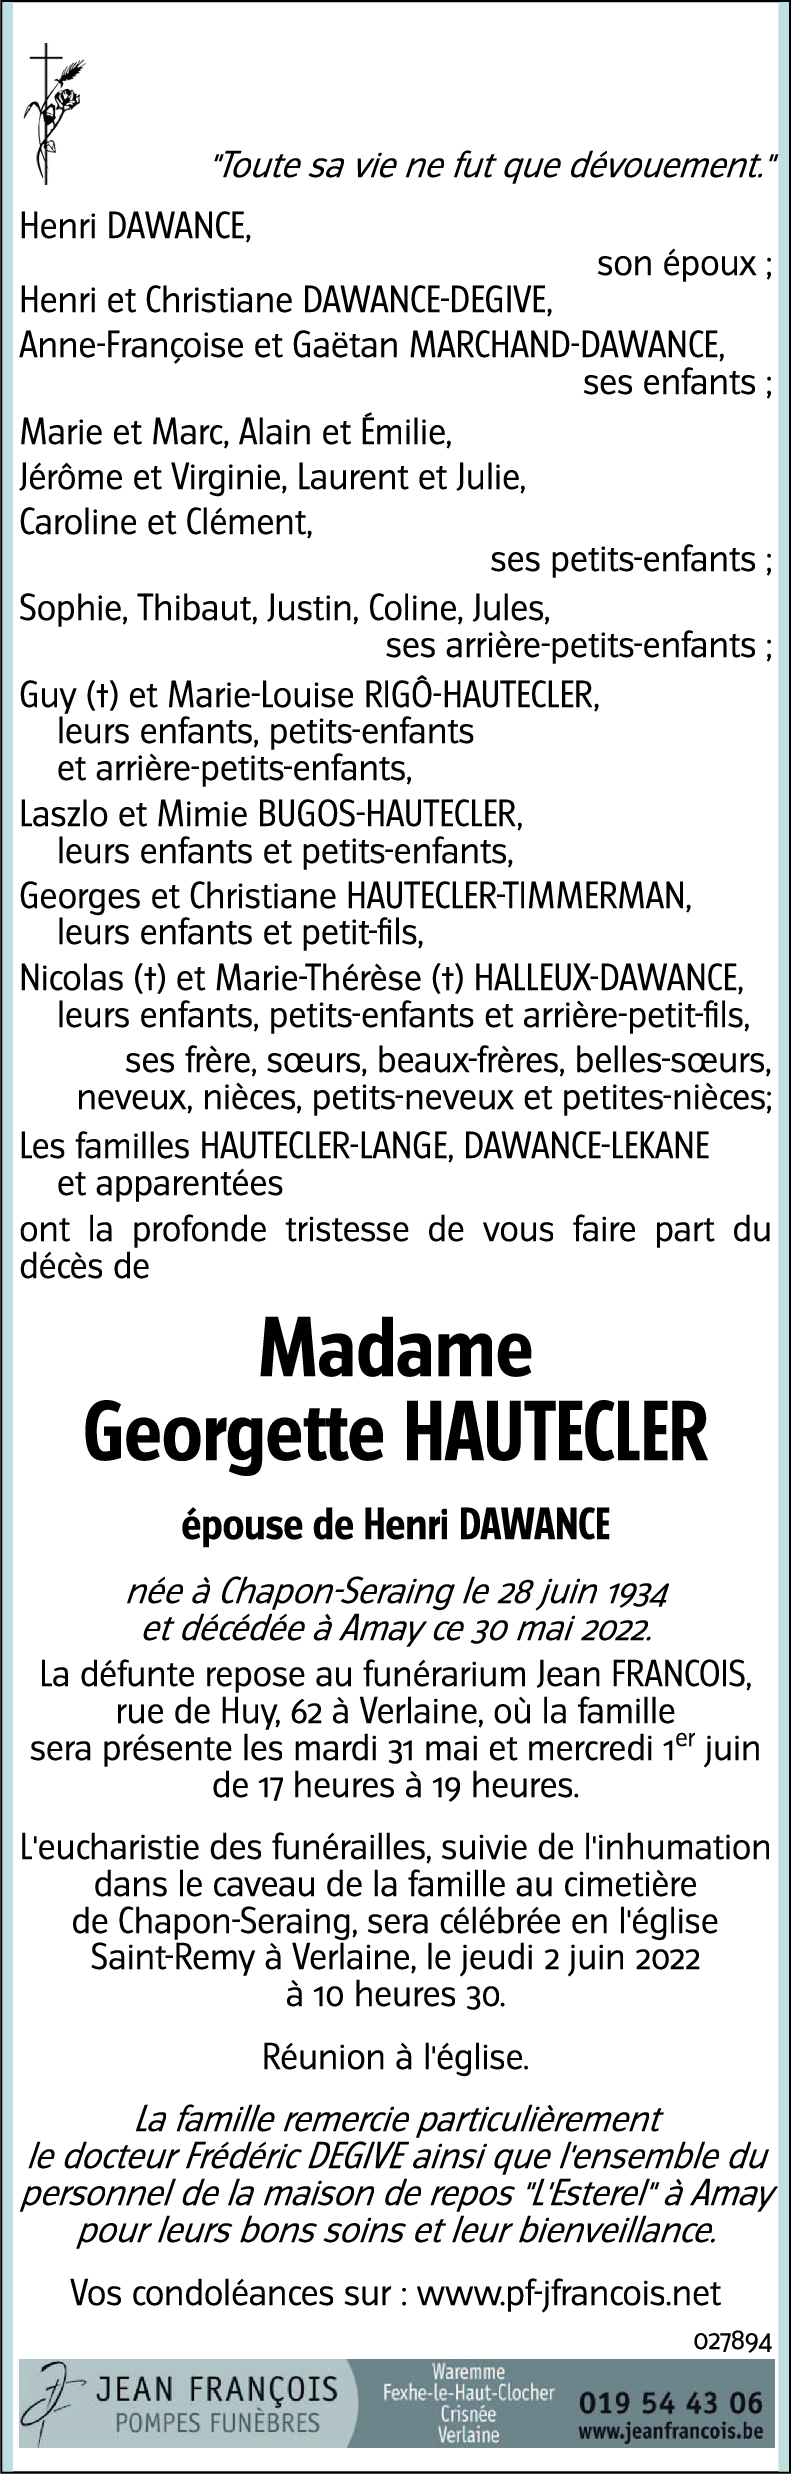 Georgette HAUTECLER